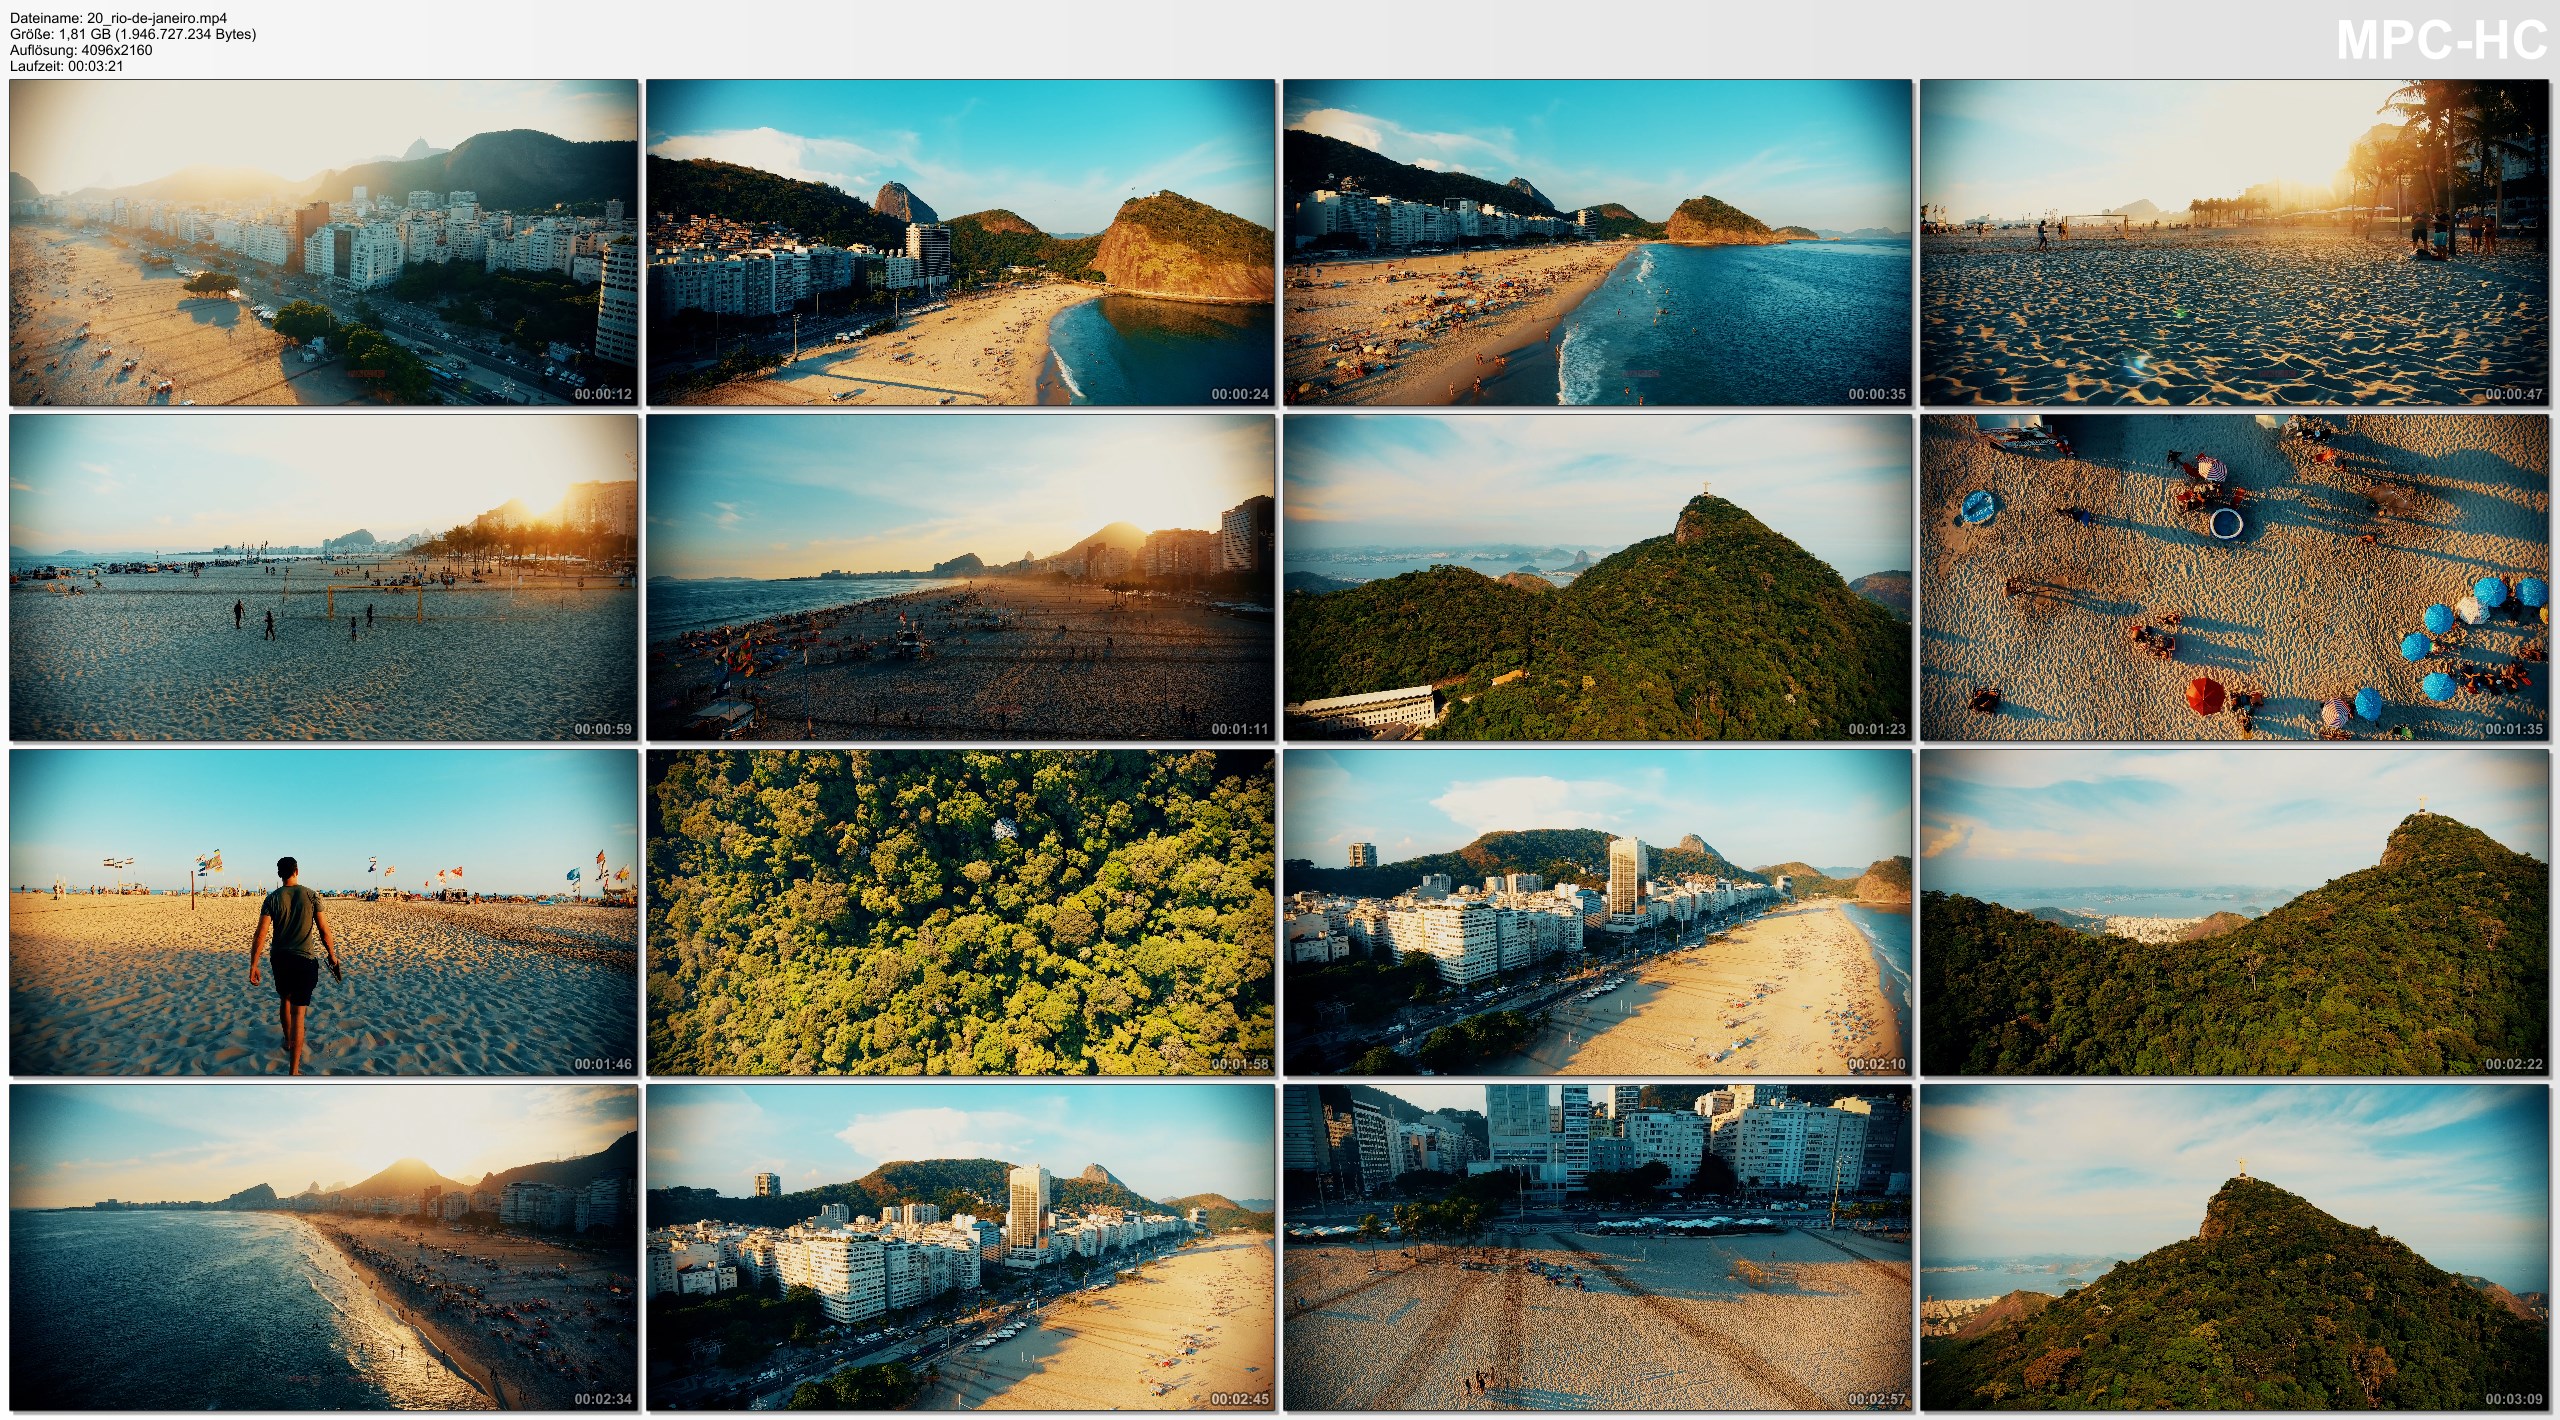 Drone Pictures from Video 4K Drone Footage RIO DE JANEIRO [DJI Phantom 4]